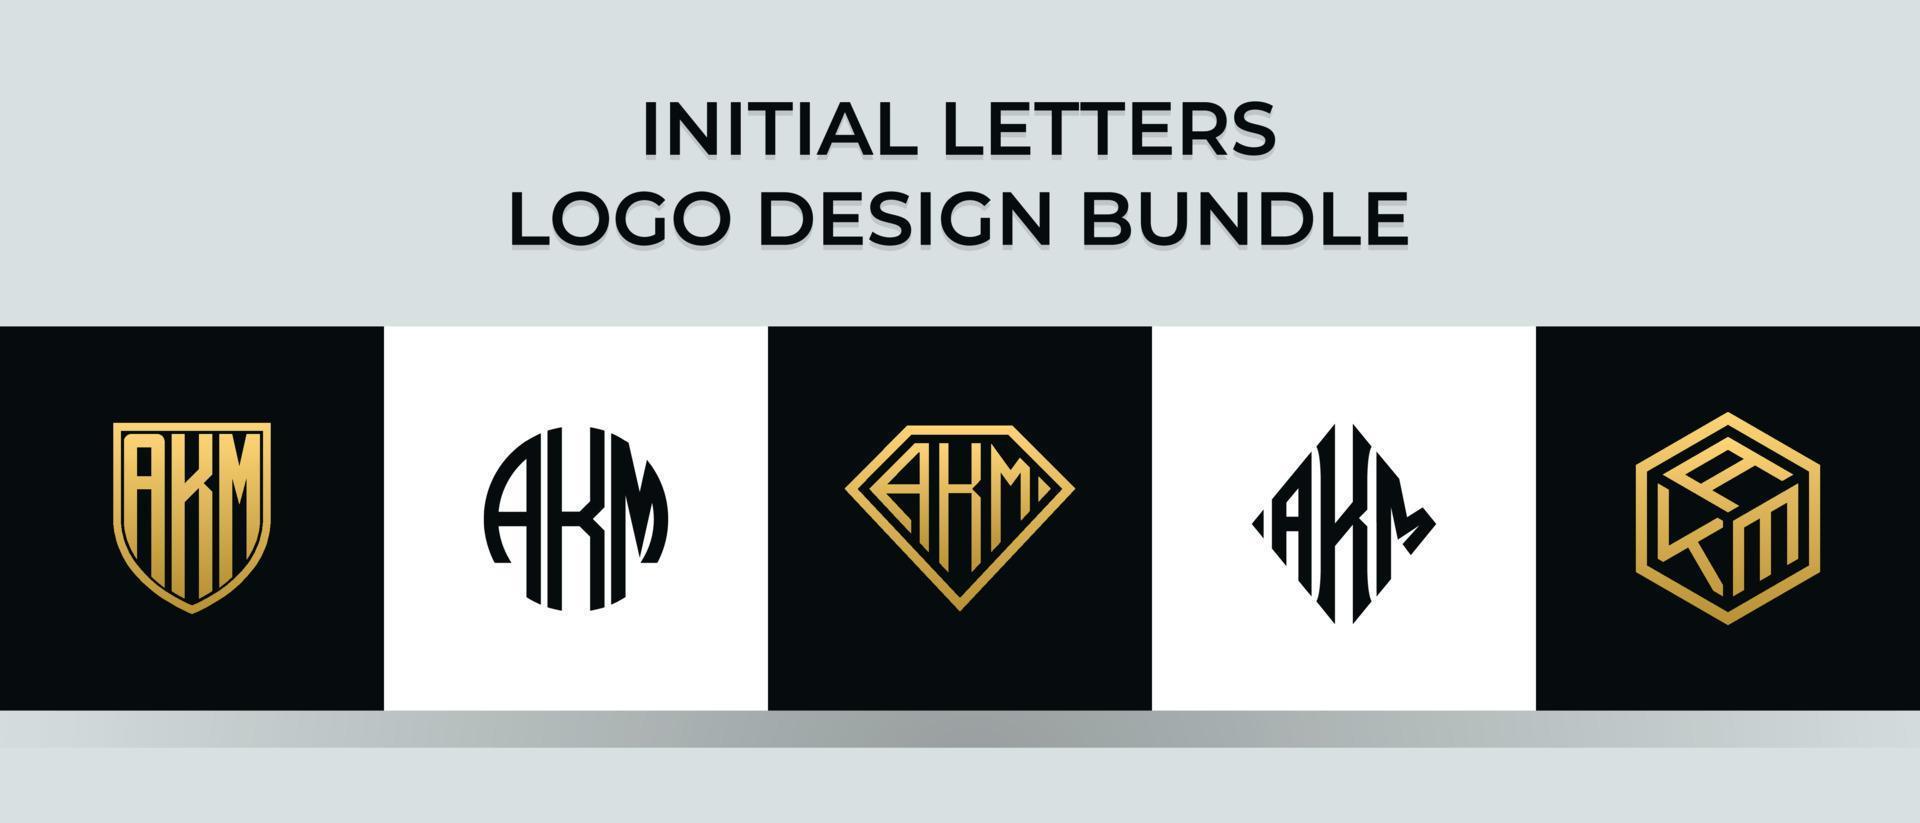 Anfangsbuchstaben akm Logo Designs Bundle vektor